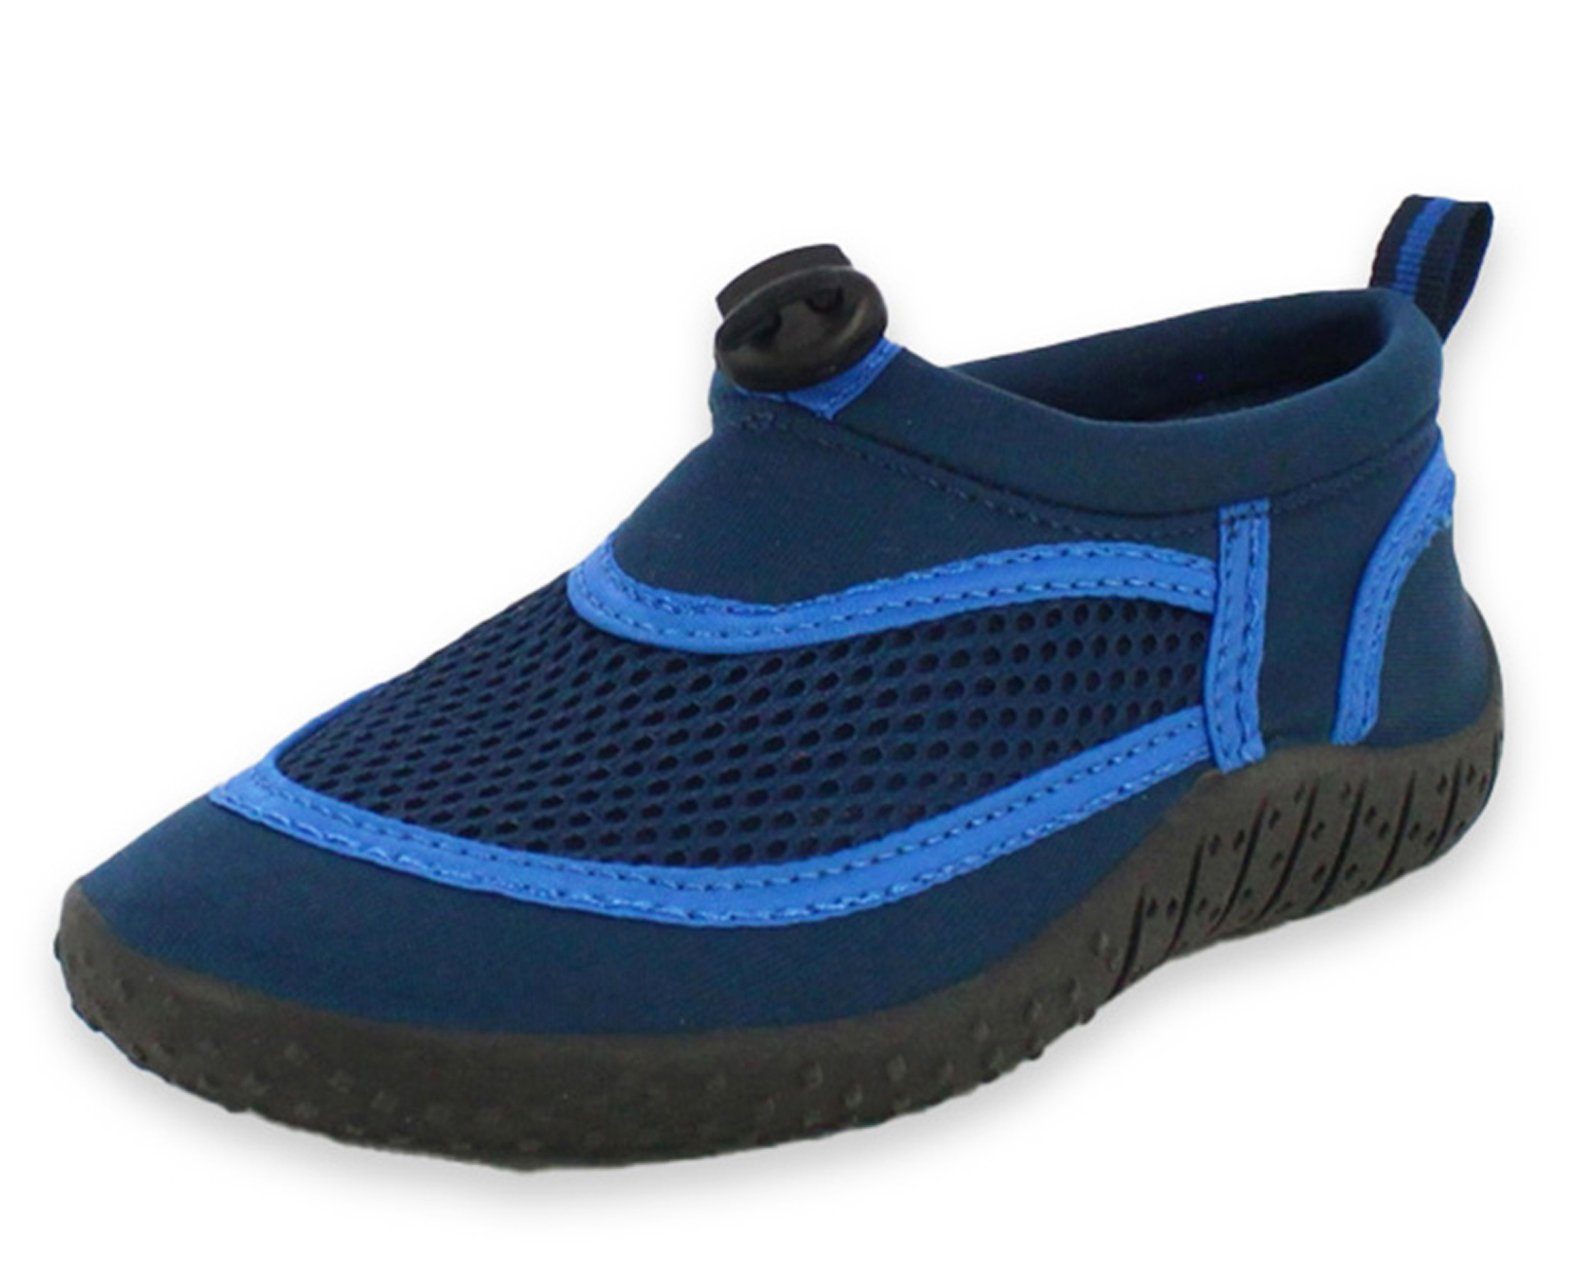 Pool Aqua für Beck Laufsohle, stabile flexible, und Schuhe, Badeschuh dunkelblau flexible geschützte schnelltrocknend an rutschfeste (leichte, Badeschuh Strand) Füße